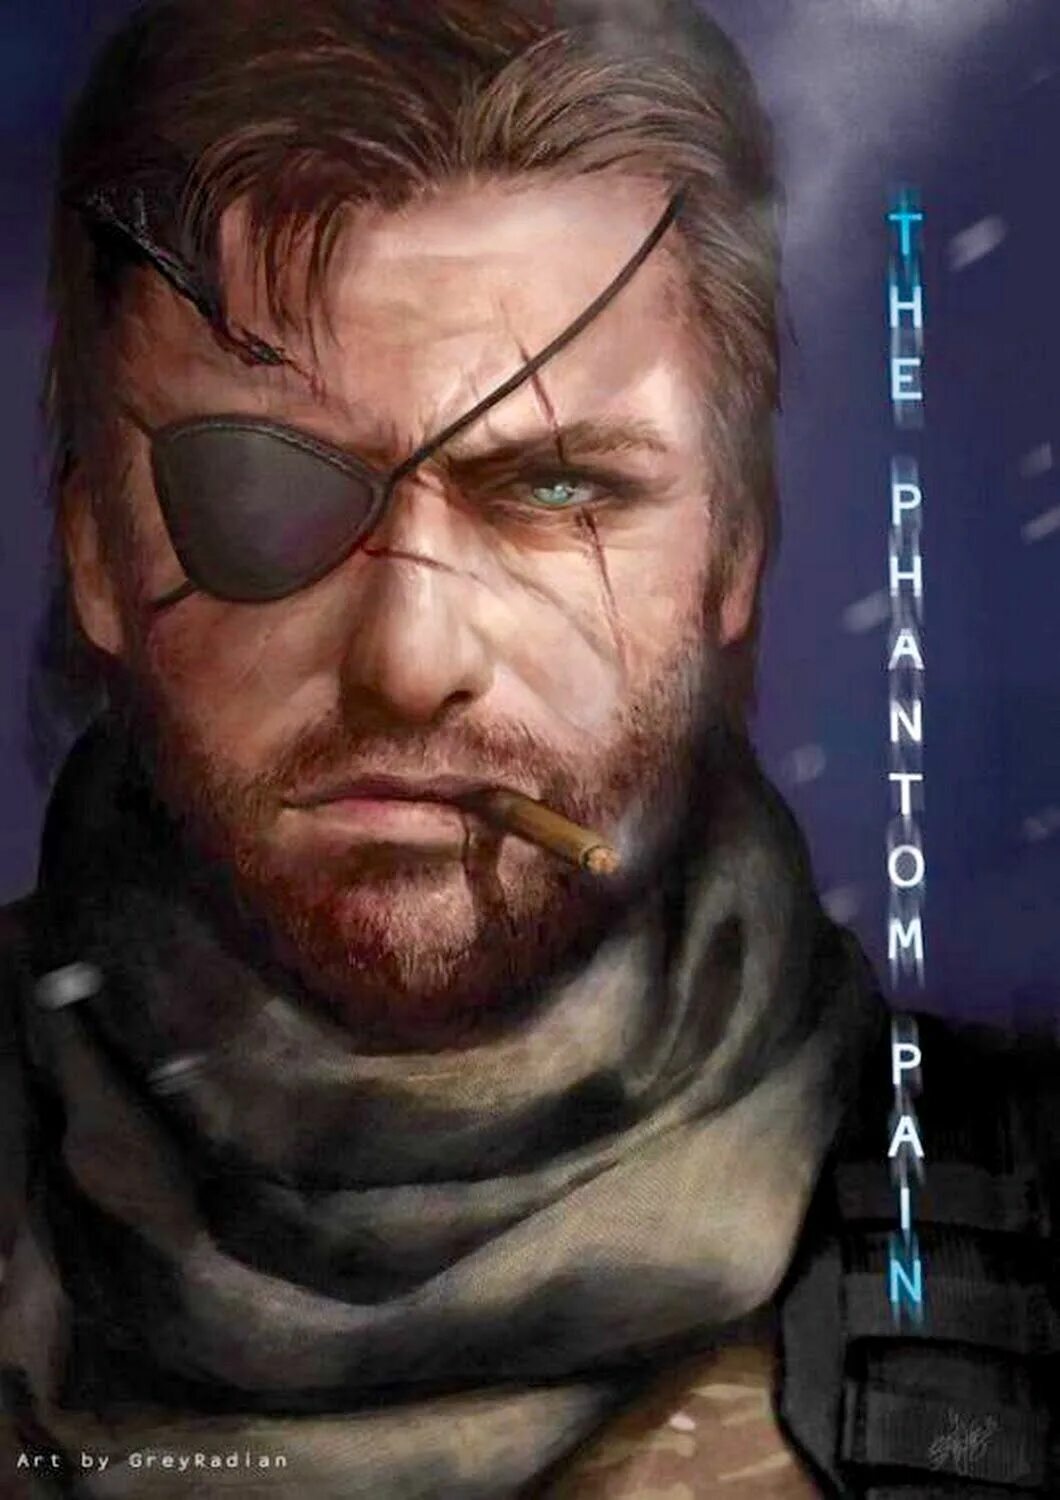 Биг босс биография. Солид Снейк и Биг босс. Биг босс Metal Gear 5. Metal Gear Solid Веном Снейк. Солид Снейк МГС.